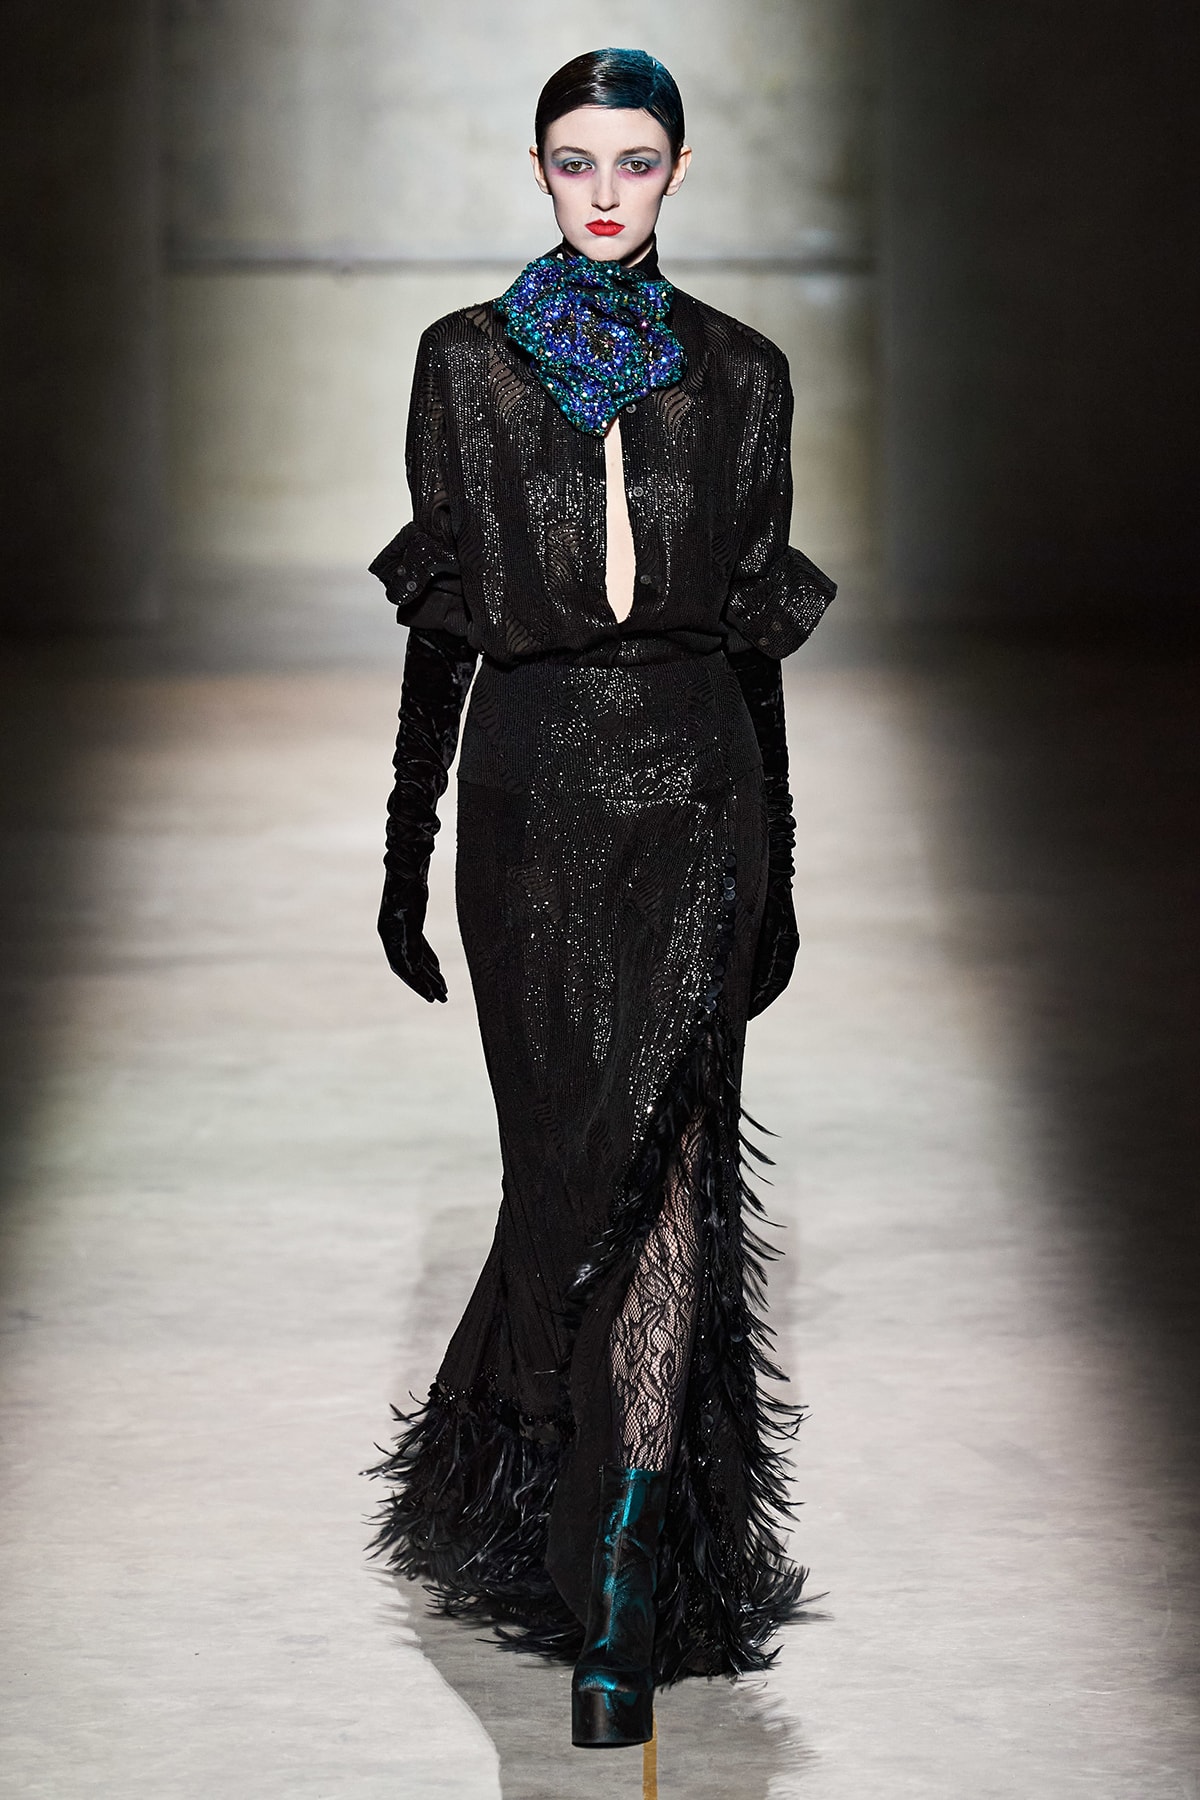 Dries Van Noten Fall/Winter 2020 Collection Runway Show Sheer Feather Dress Black